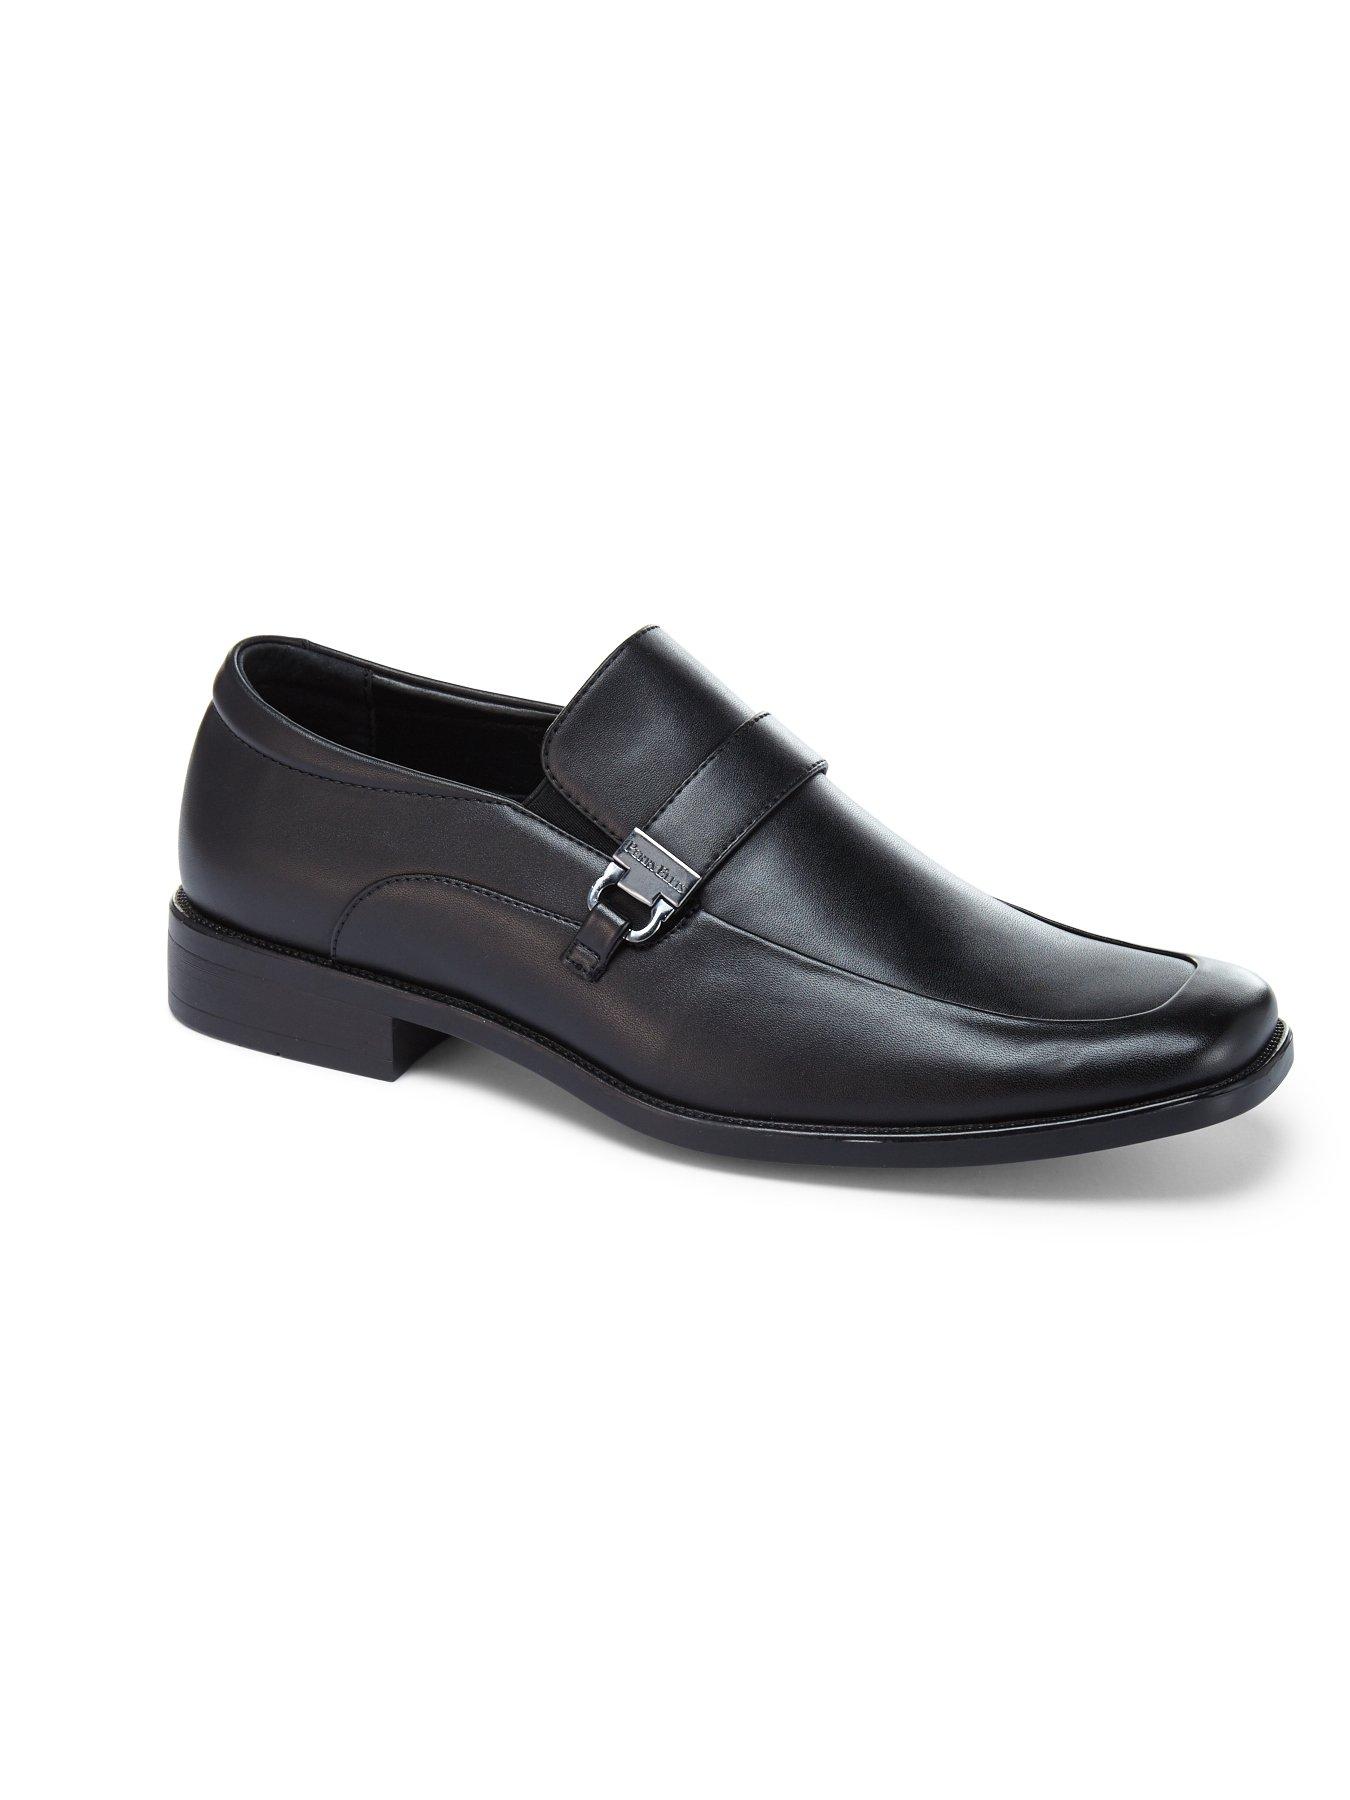 Perry Ellis Christian Portfolio Dress Shoe in Black for Men - Save 51% ...